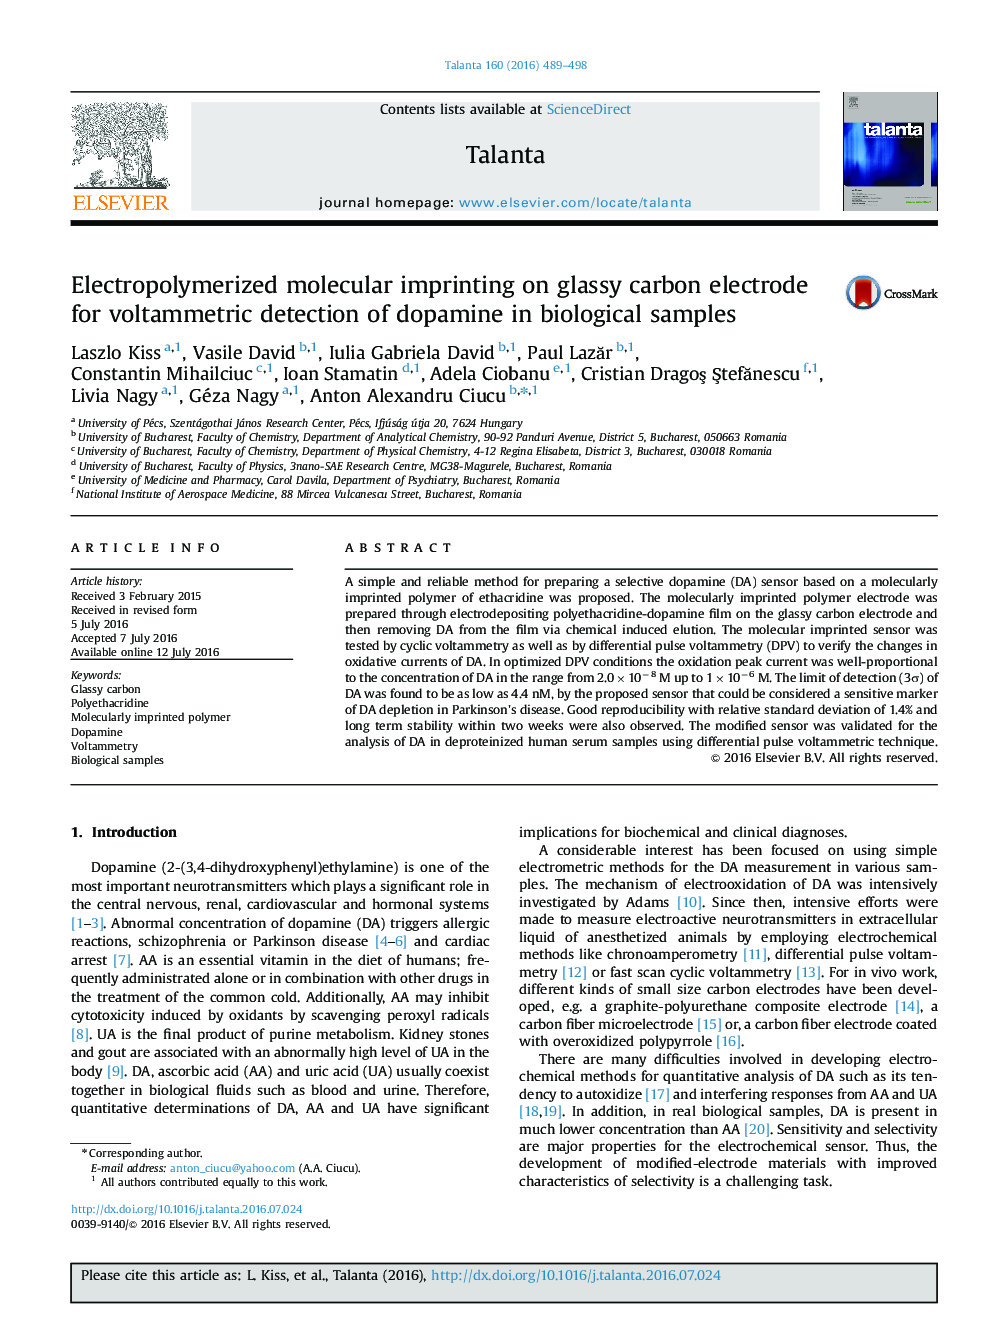 Electropolymerized molecular imprinting on glassy carbon electrode for voltammetric detection of dopamine in biological samples